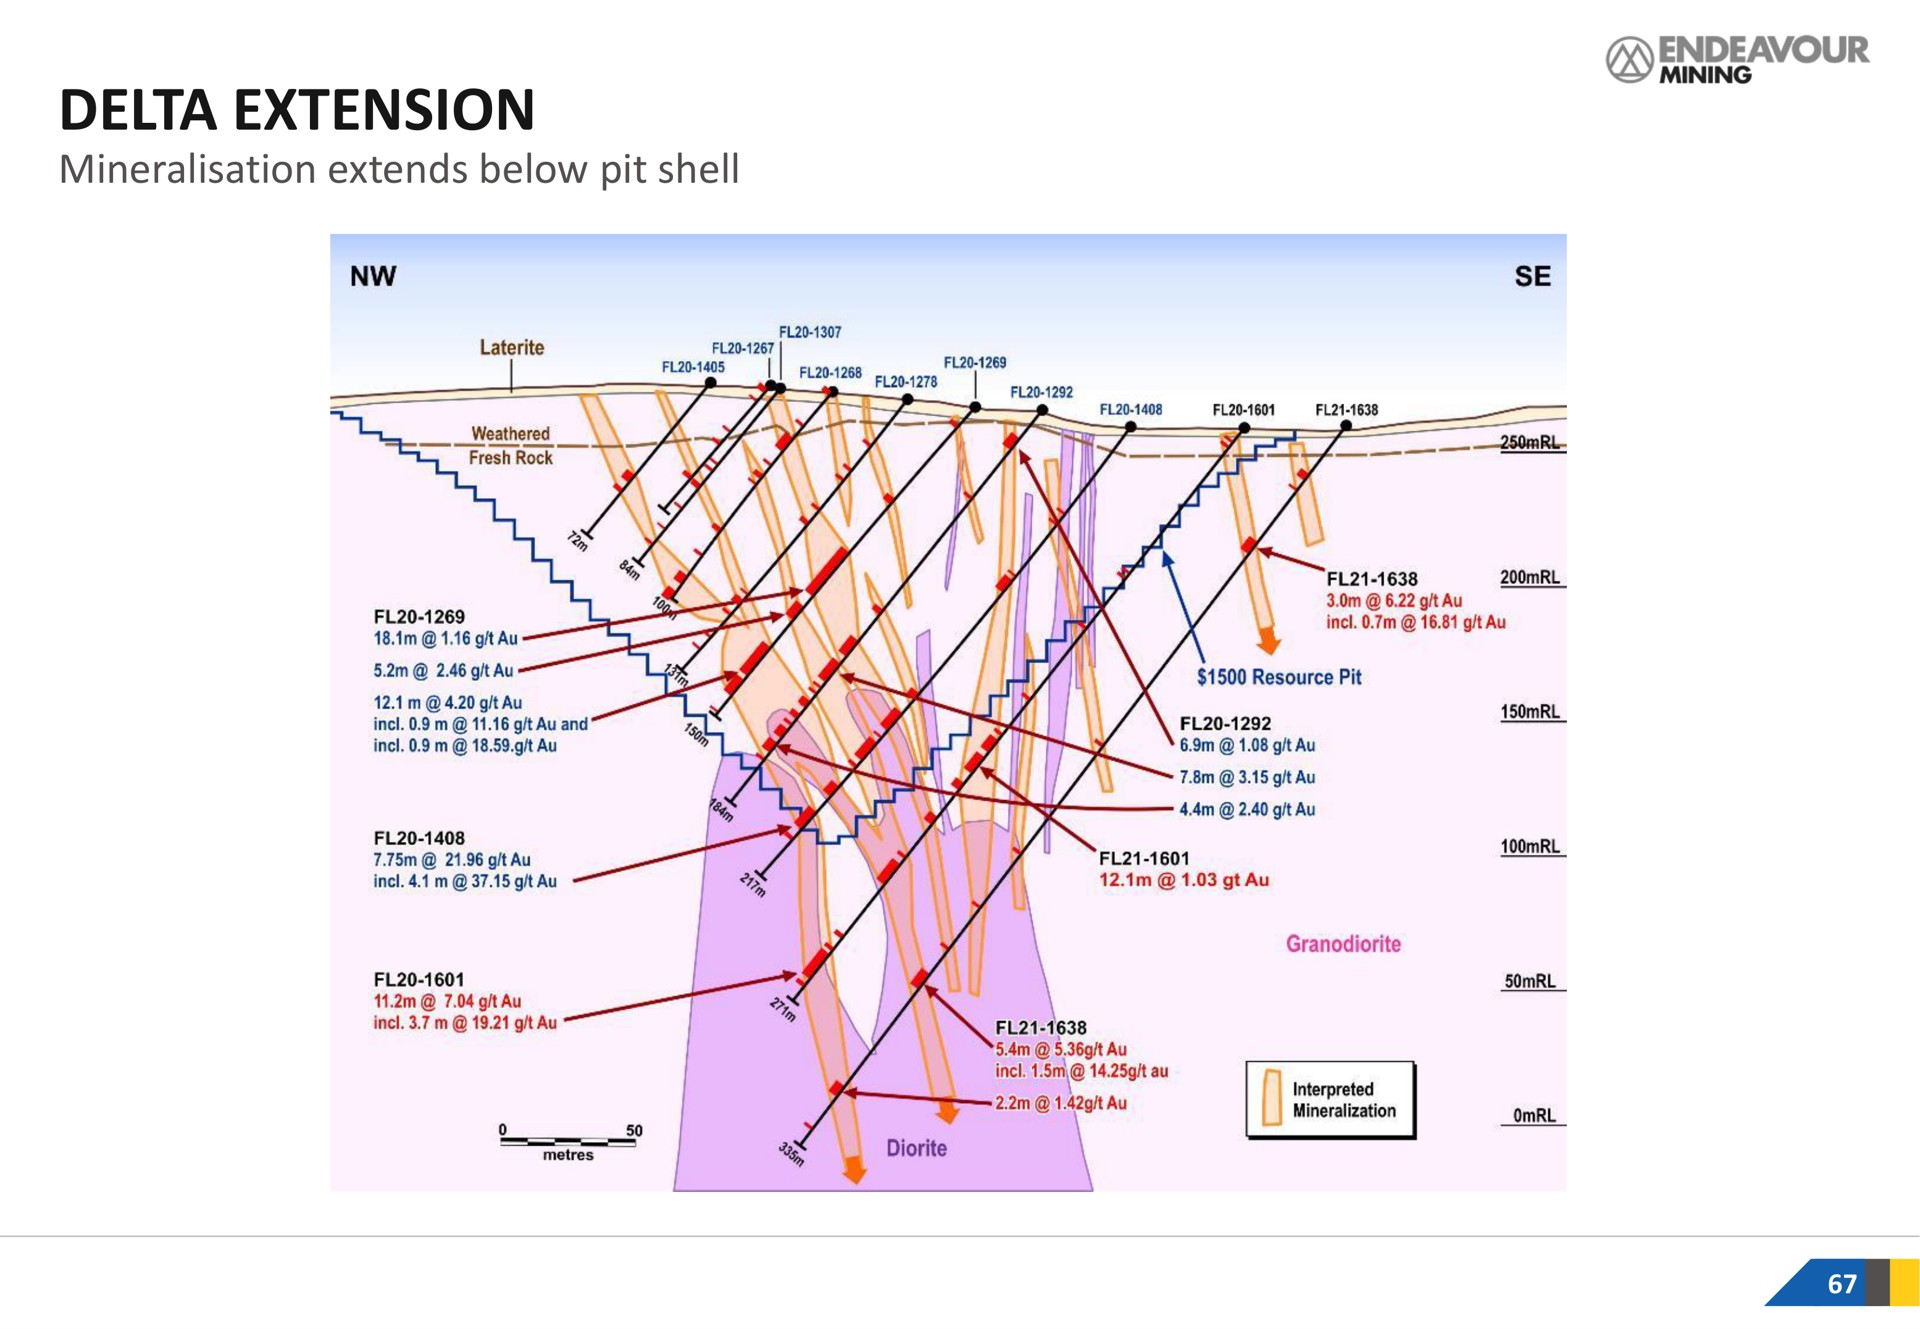 delta extension extends below pit shell | Endeavour Mining